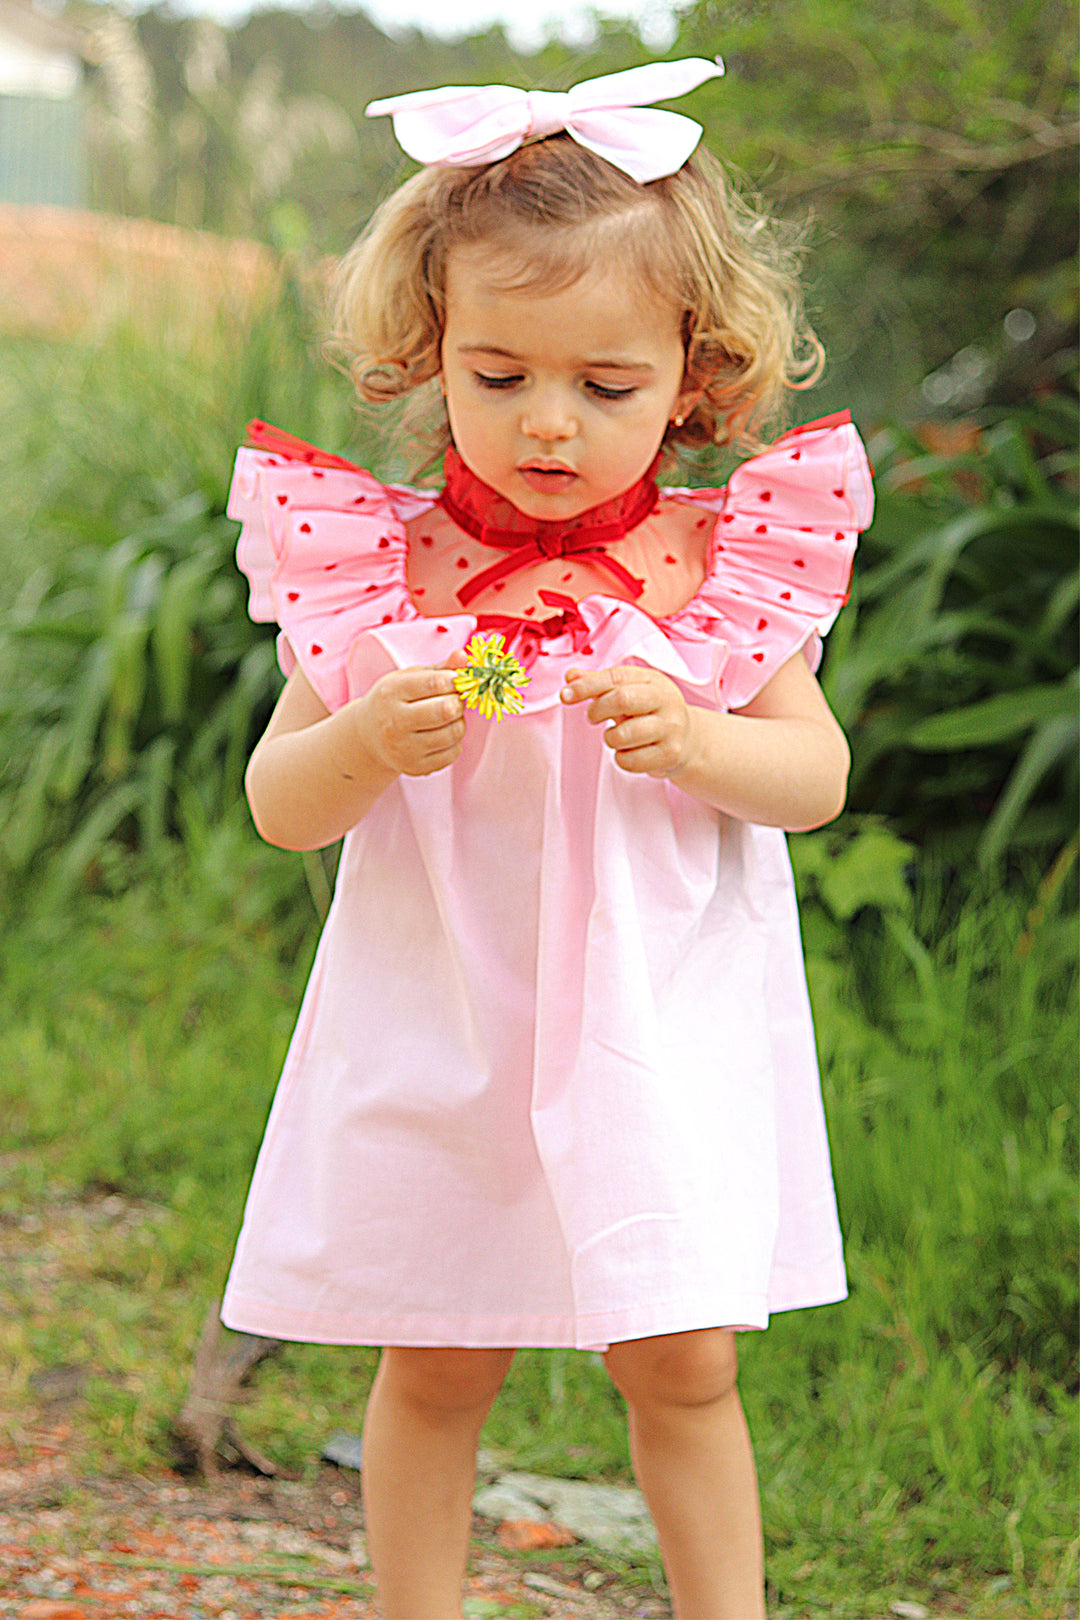 Phi "Lovella" Pink & Red Heart Print Tulle Dress | Millie and John